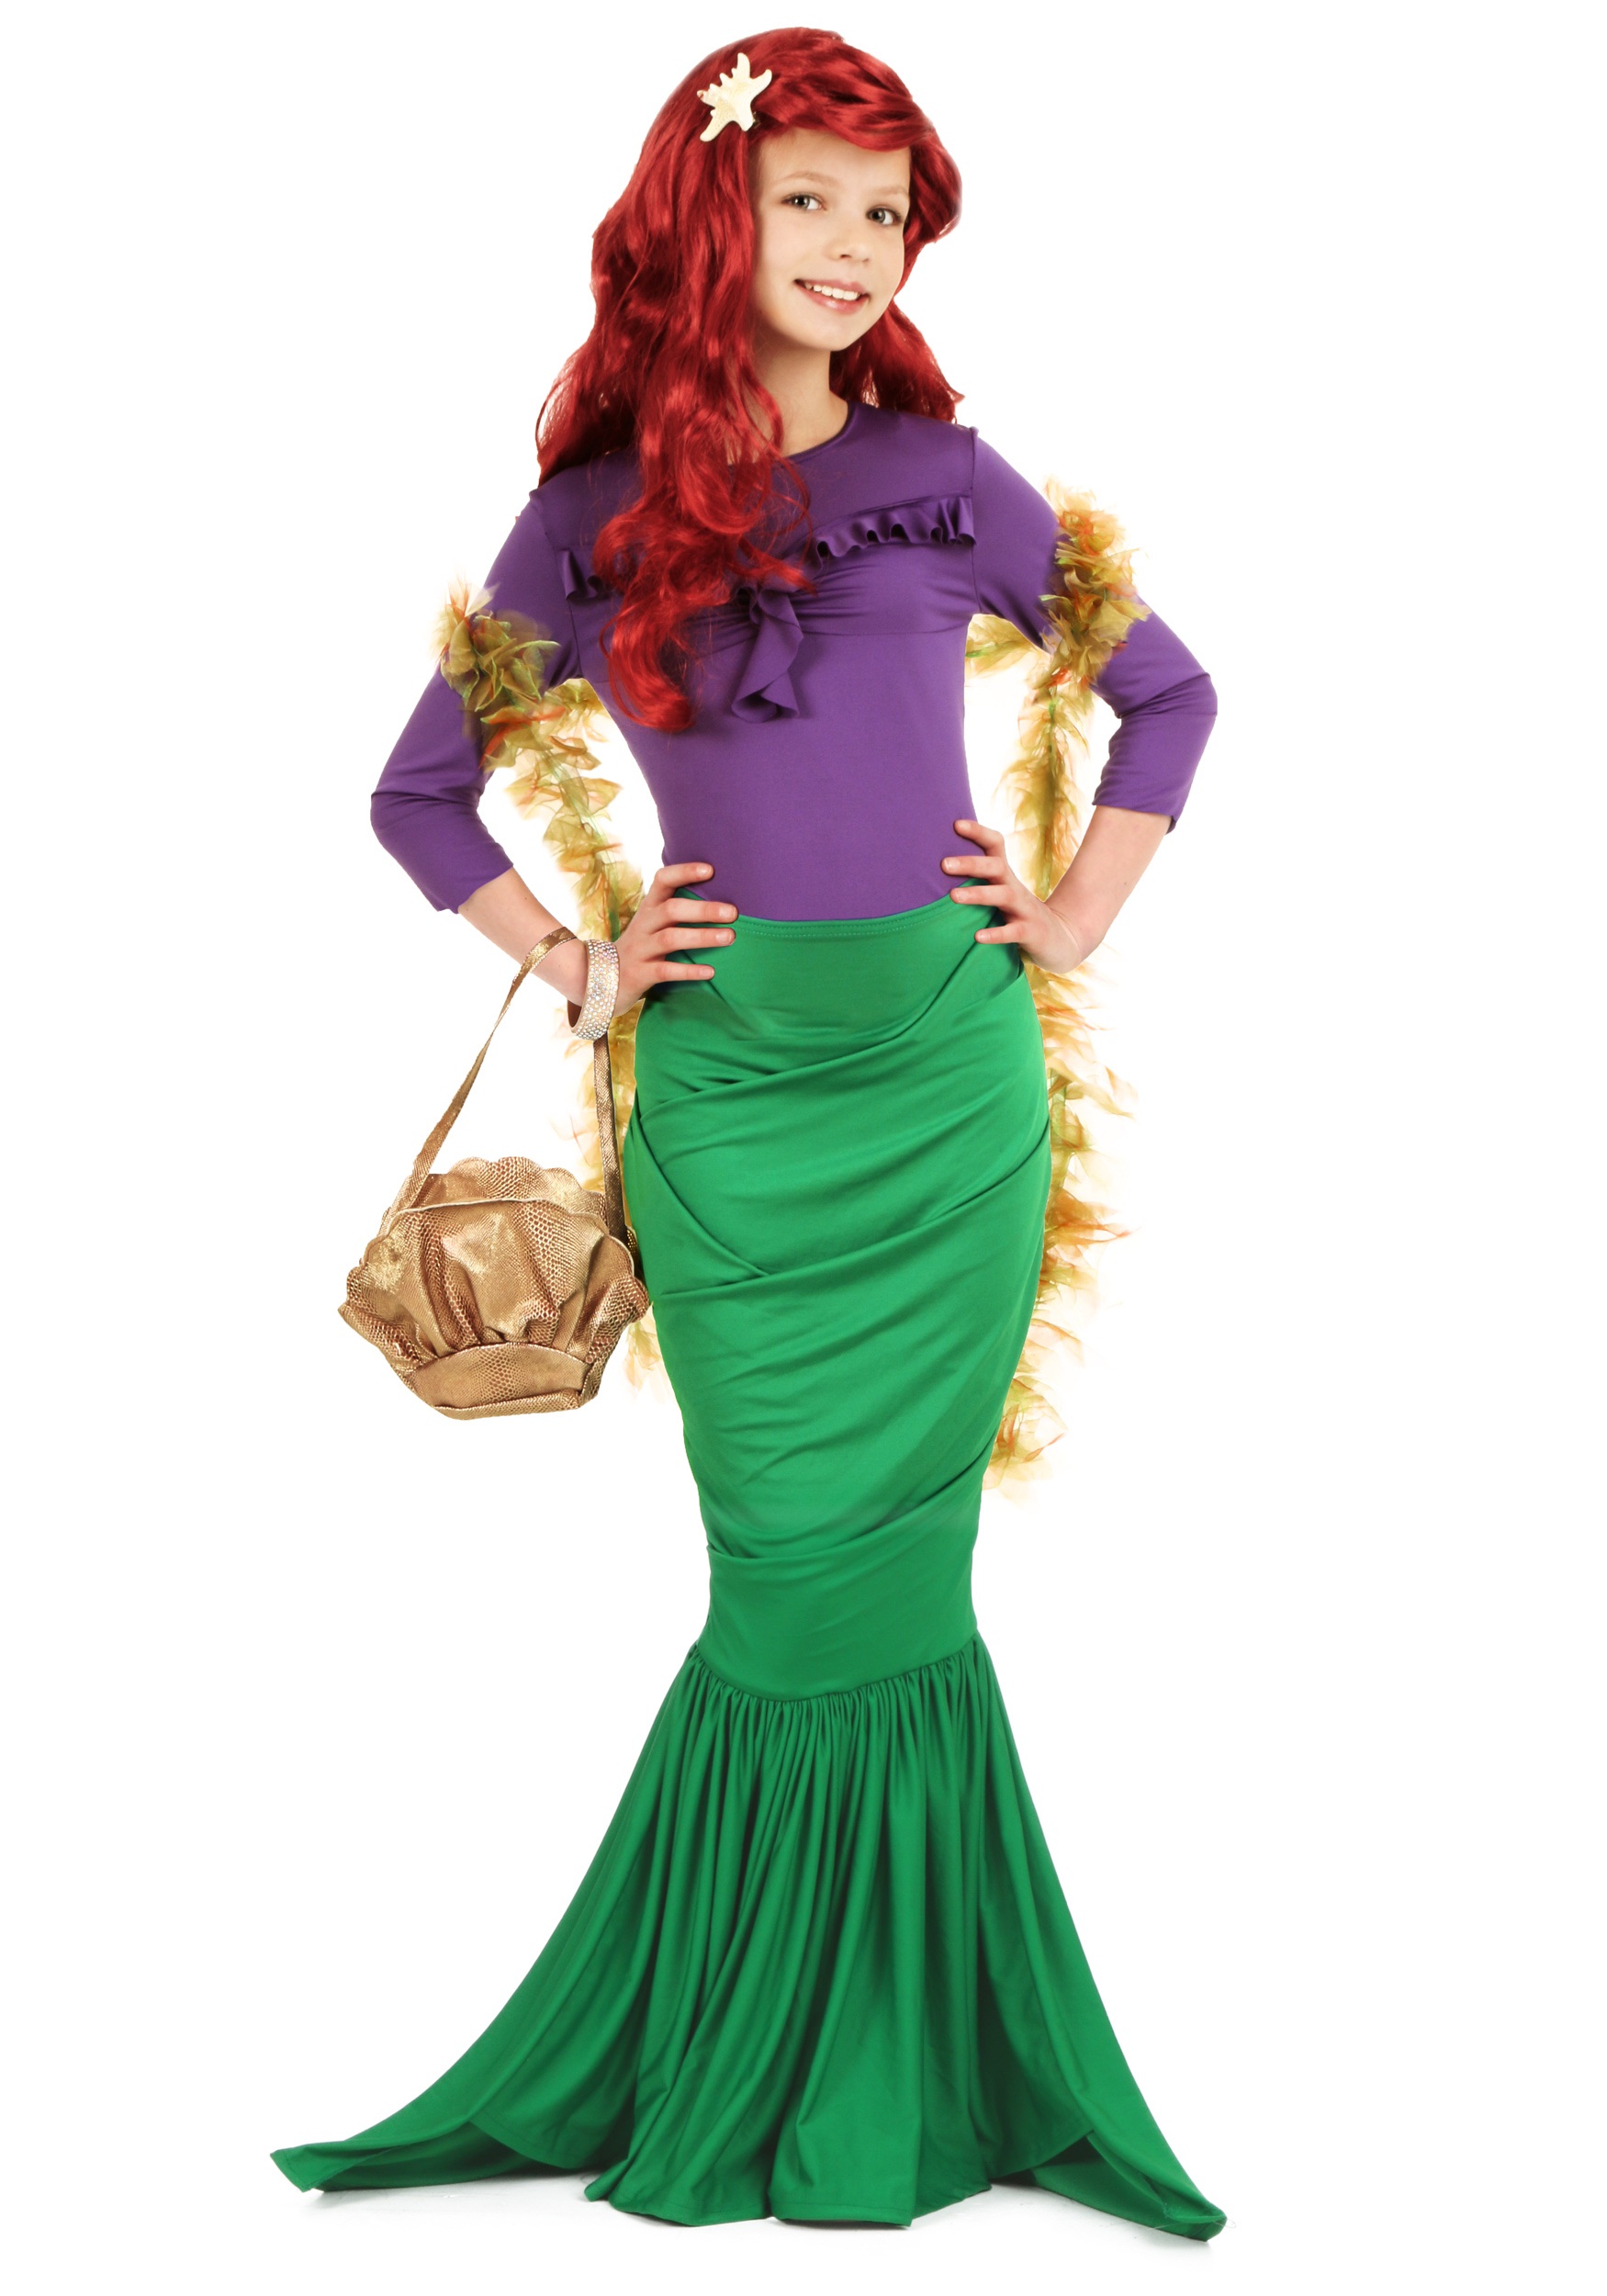 Photos - Fancy Dress FUN Costumes Bubbly Mermaid Kid's Costume Green/Purple